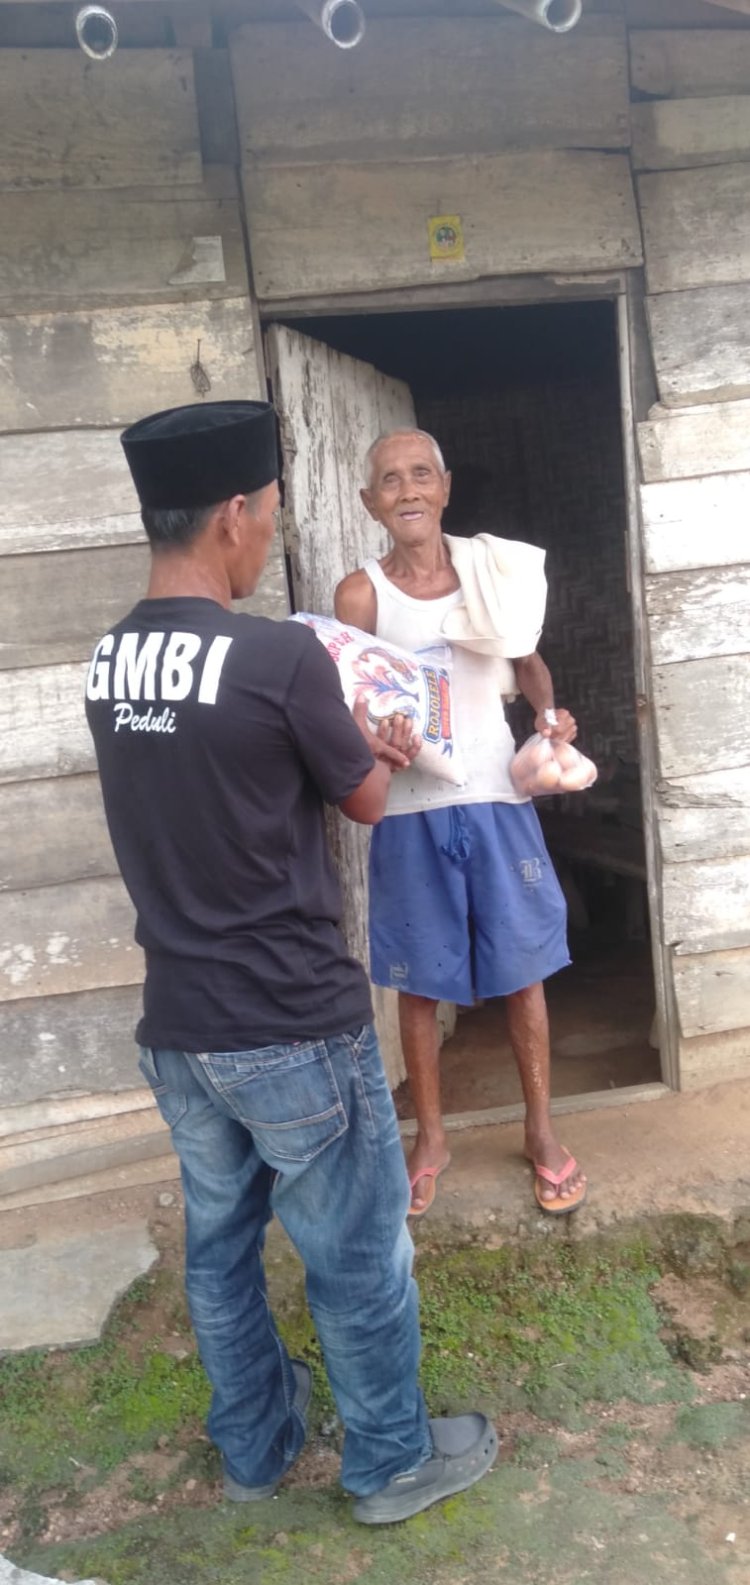 LSM GMBI KSM Merbau Mataram di HUT Ke-20 "GMBI PEDULI" Salurkan Bantuan Sembako di Empat Desa